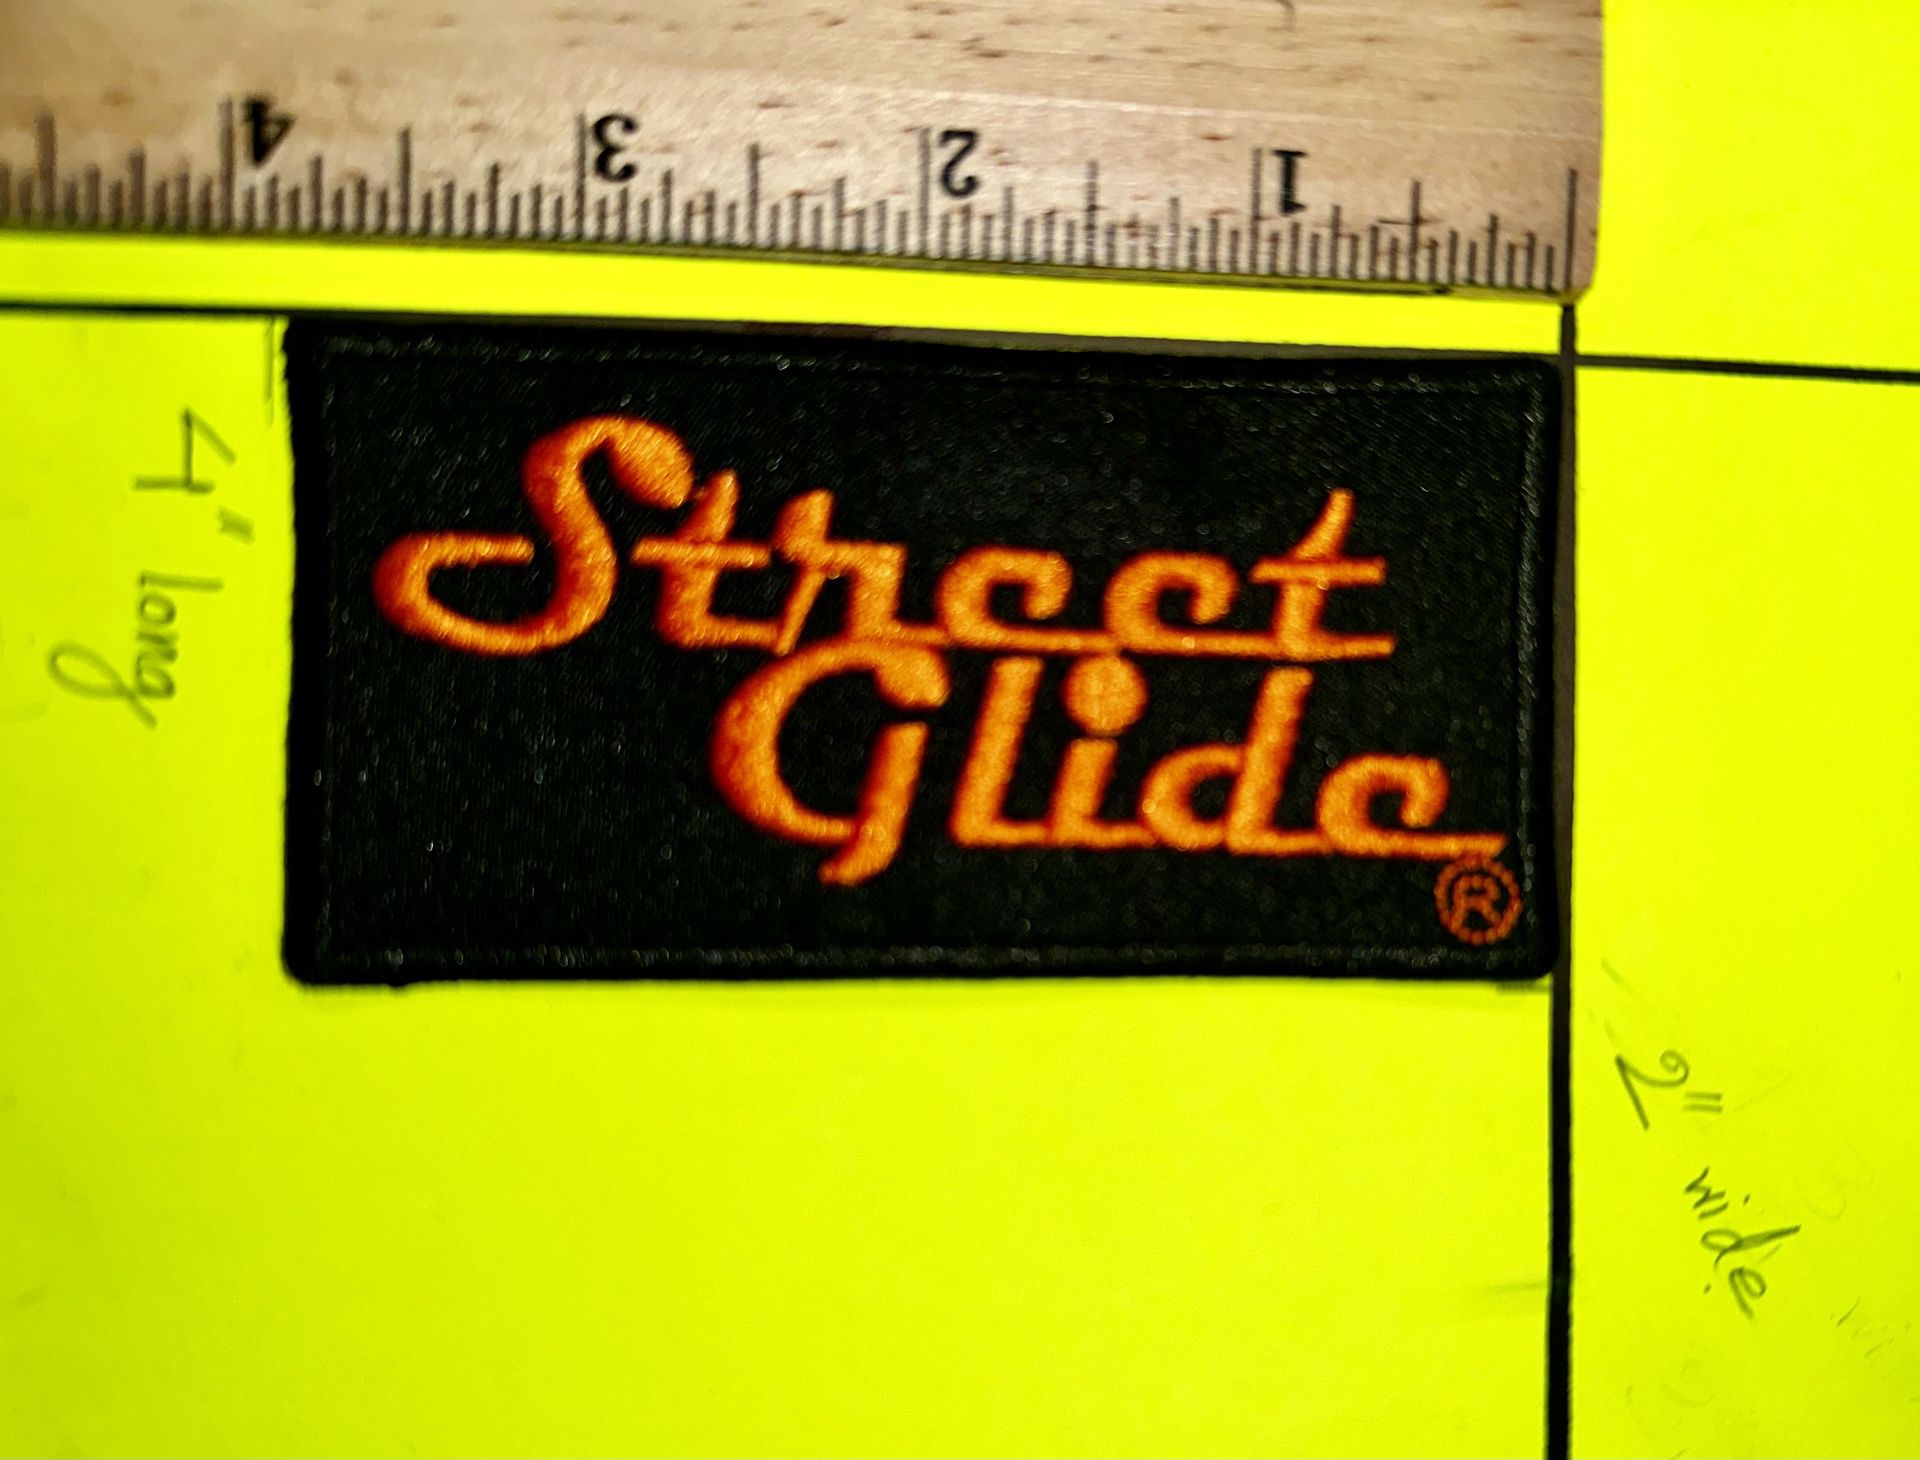 Harley-Davidson "Street Glide" Sew-on Patch, Size: 4" x 2".